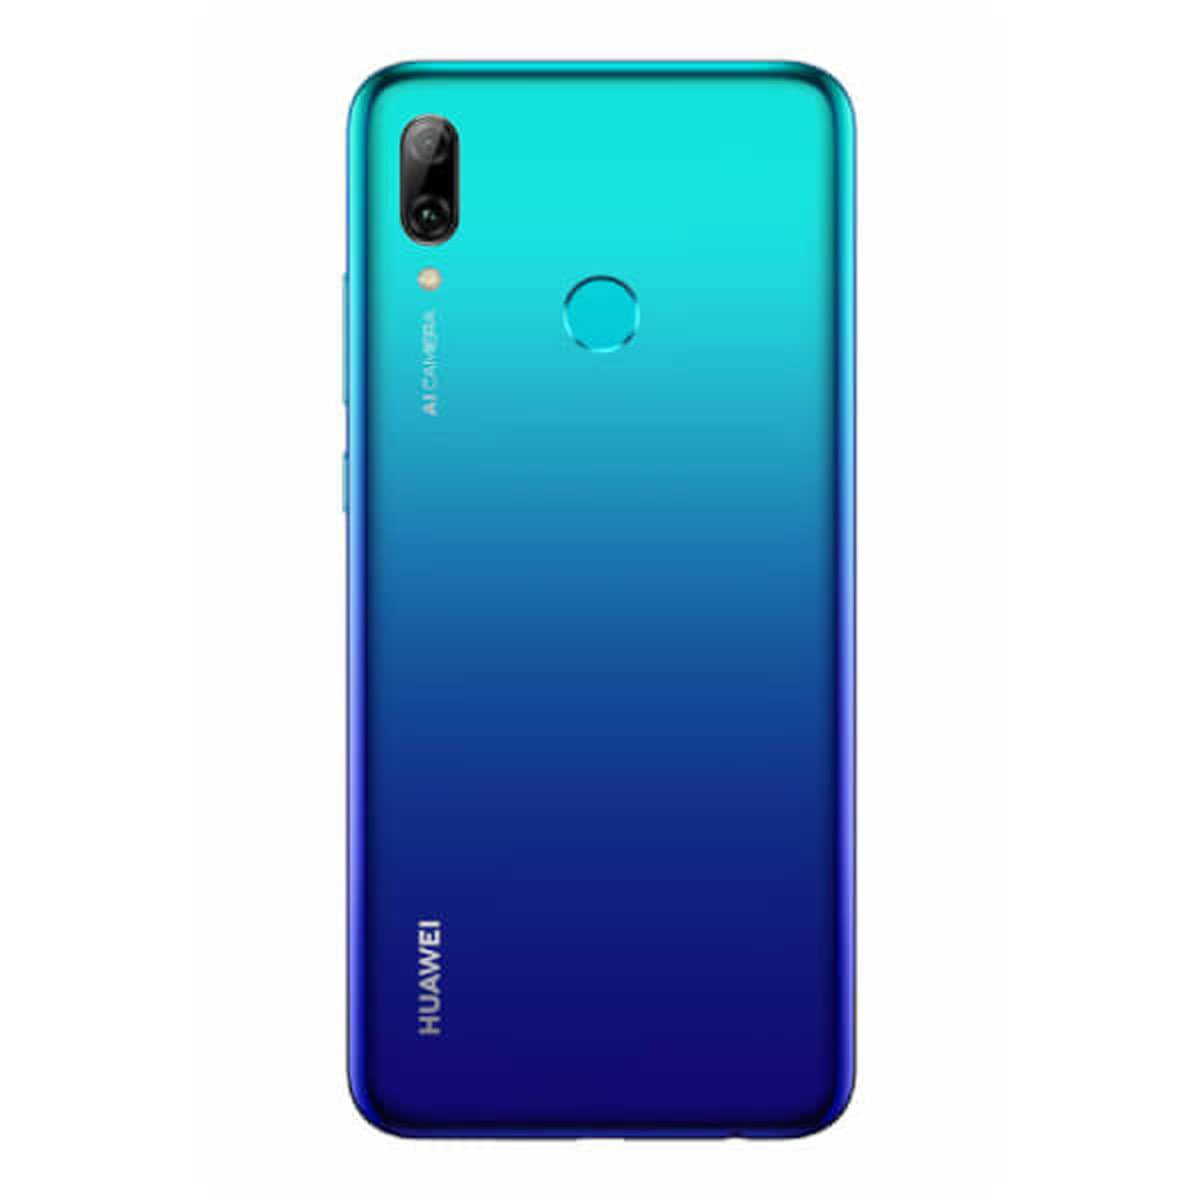 HUAWEI P Smart (2019) GB Blau 64